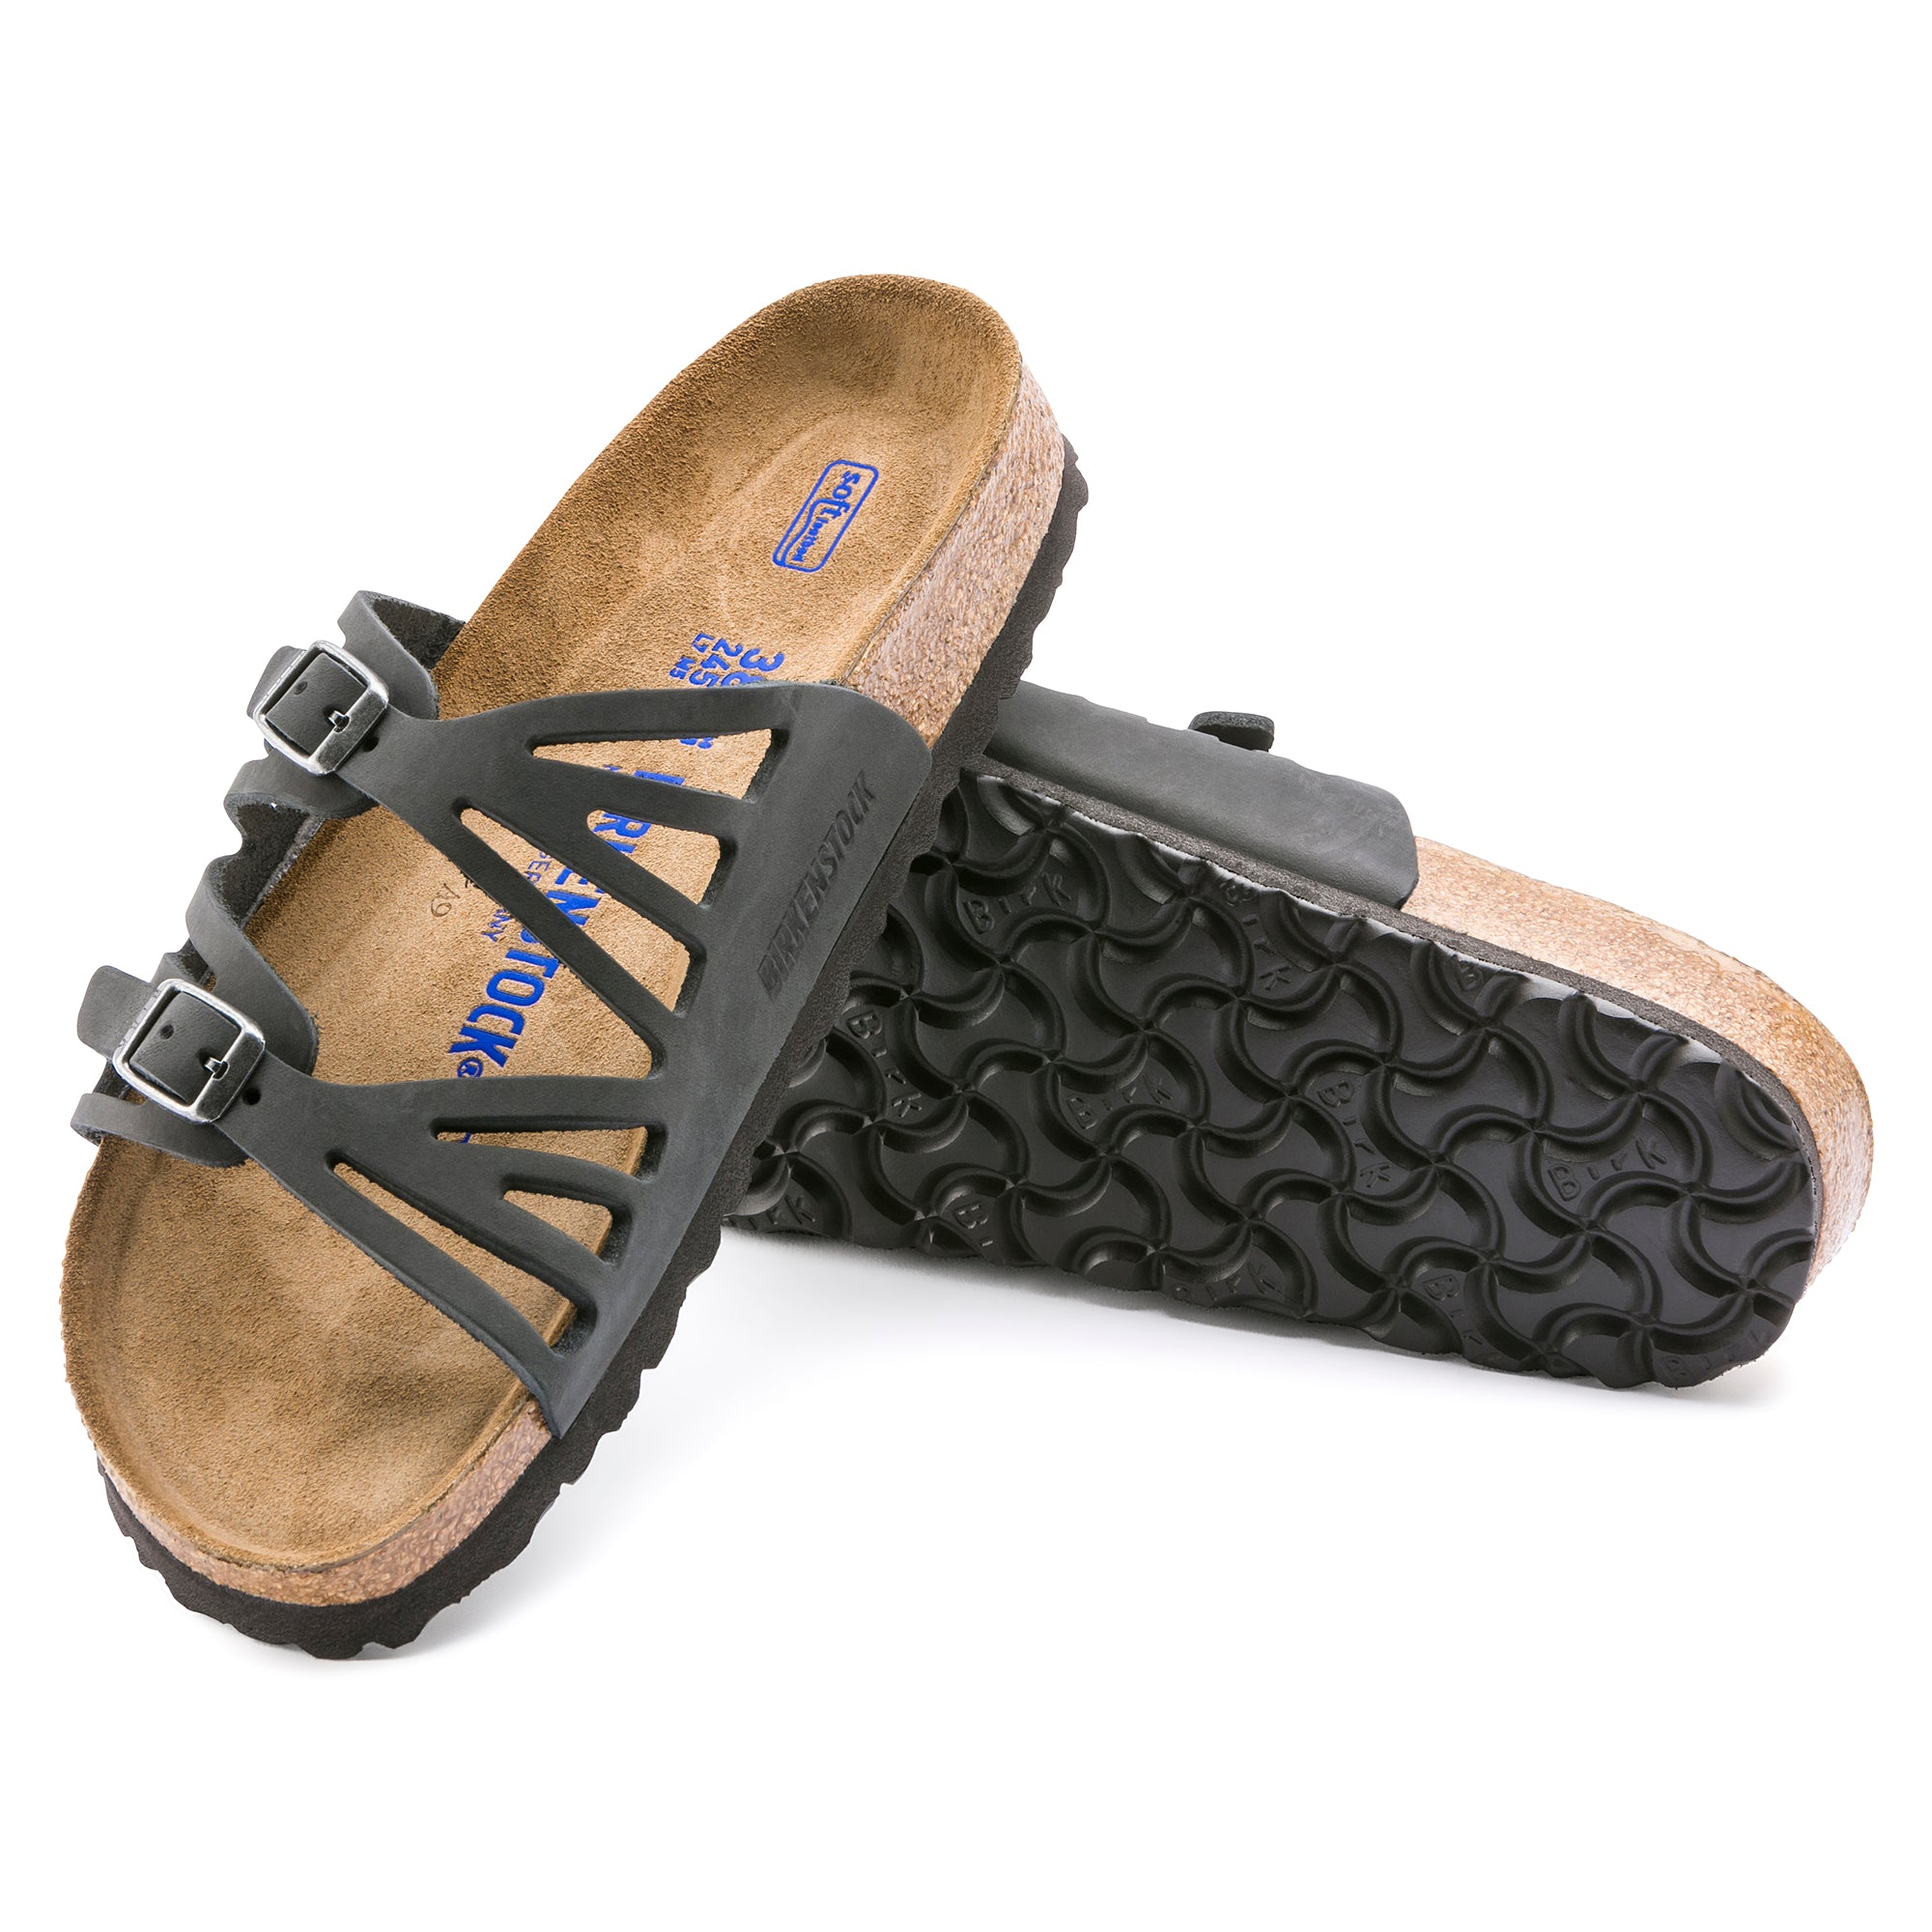 Birkenstock Womens Granada Soft Footbed Sandals - Narrow